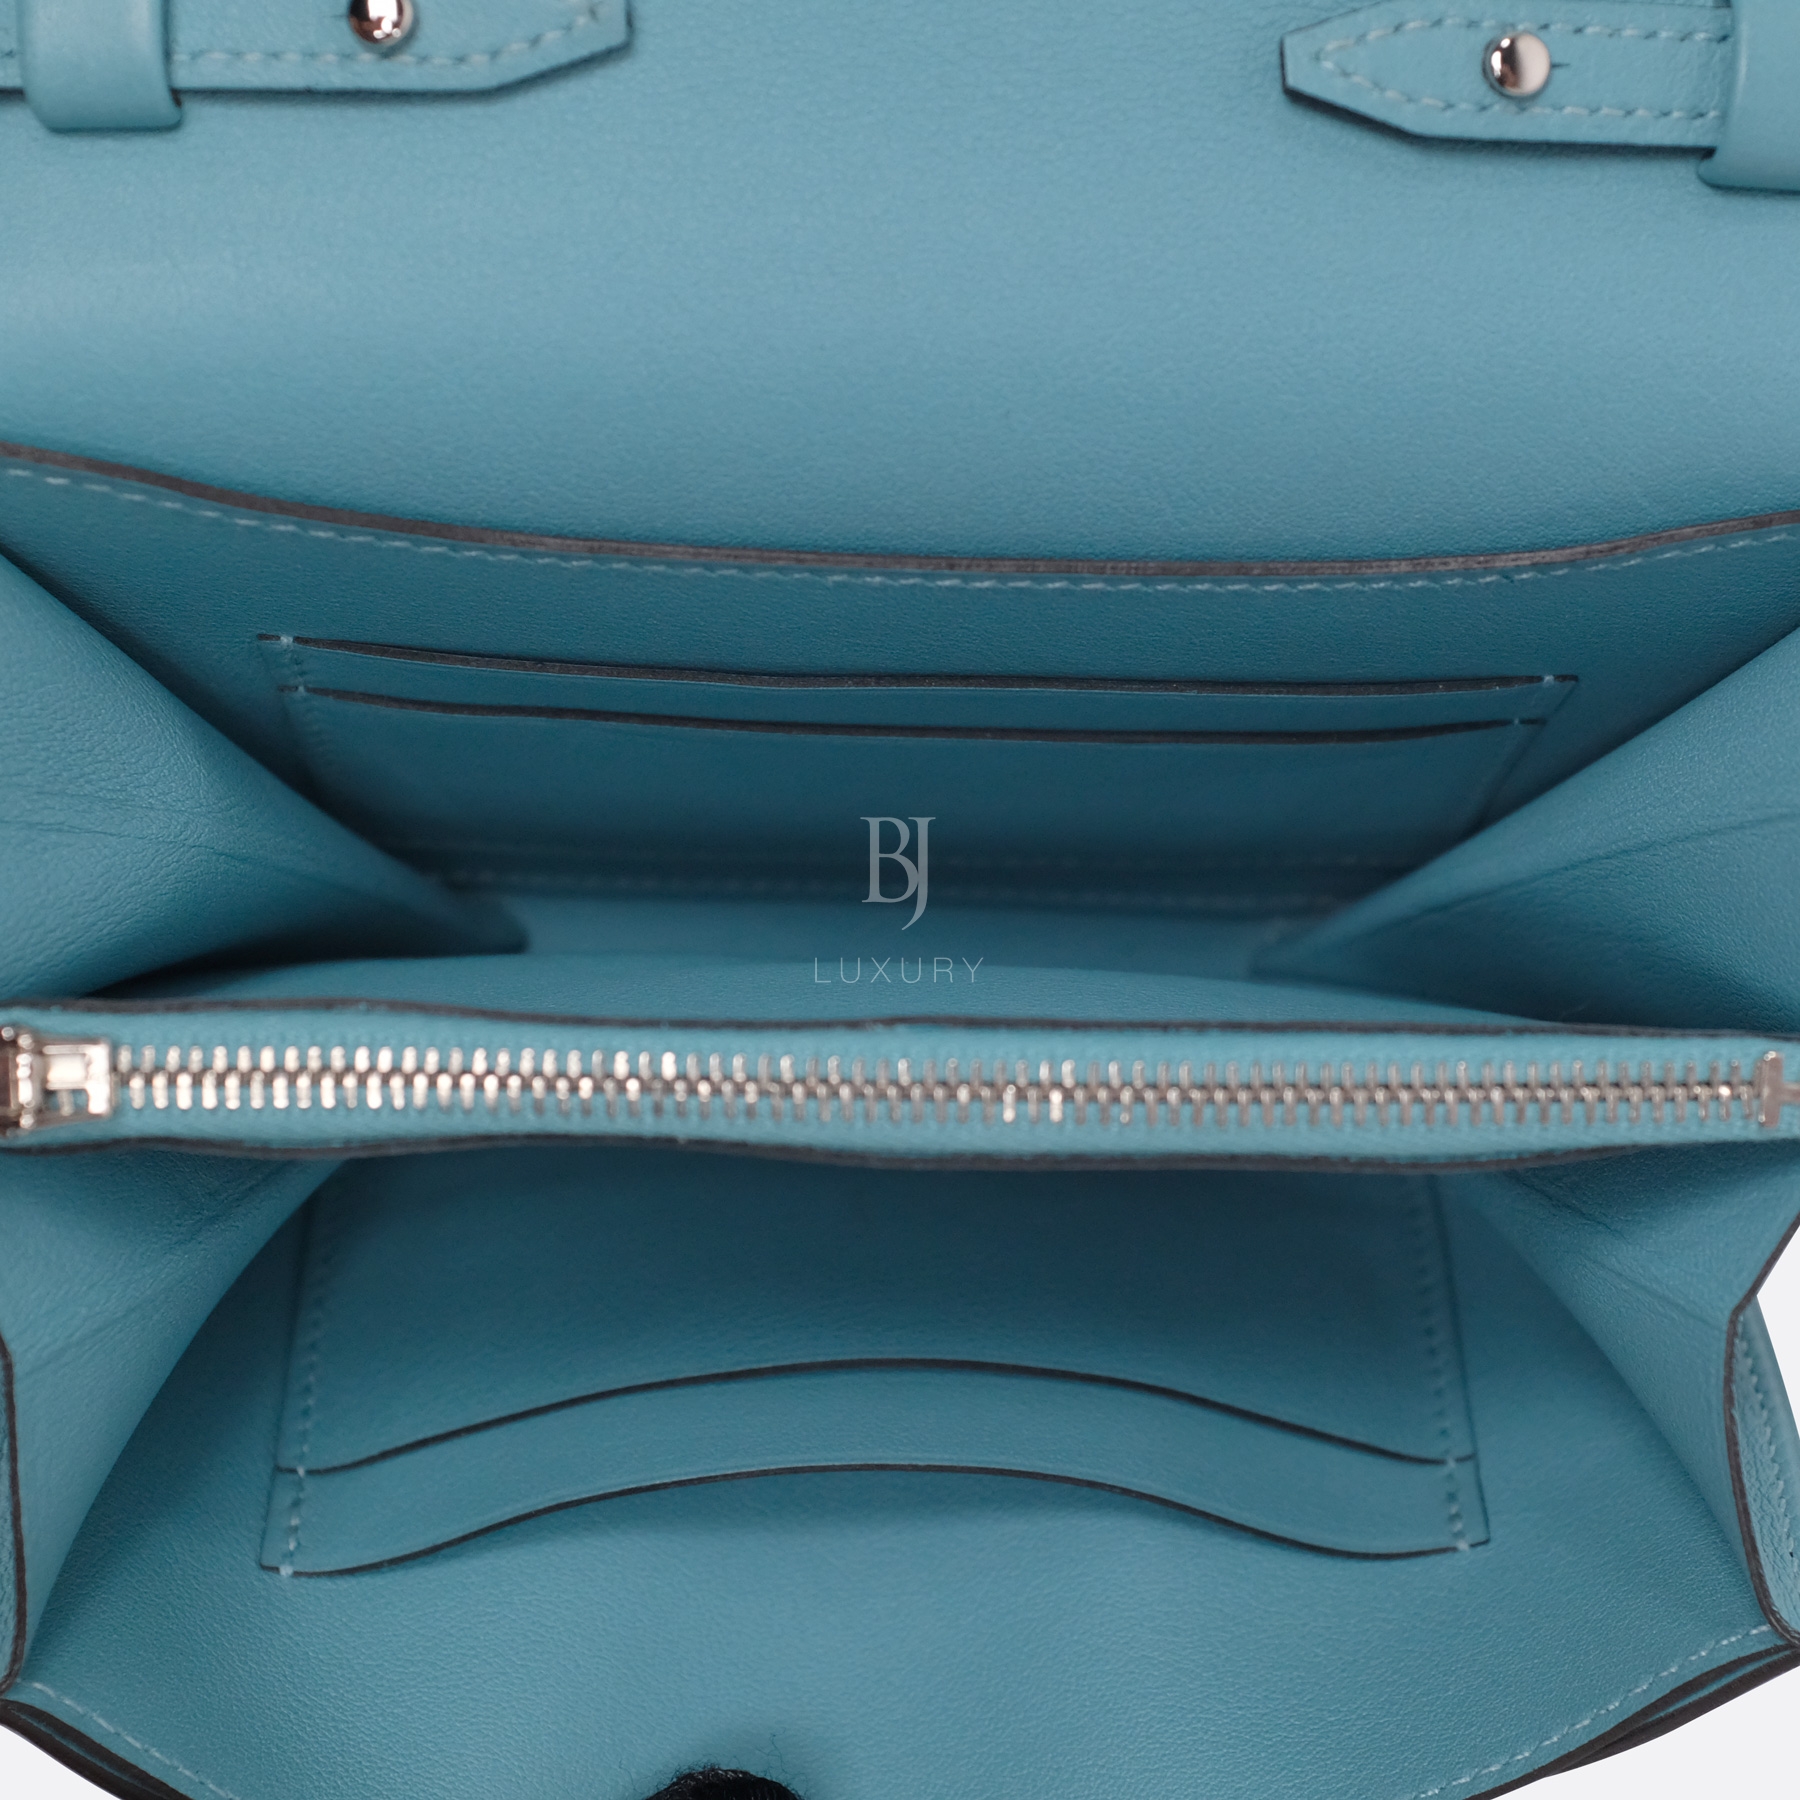 Hermes Conveyor Bag 16 Turquoise Swift Lizard Palladium BJ Luxury 16.jpg